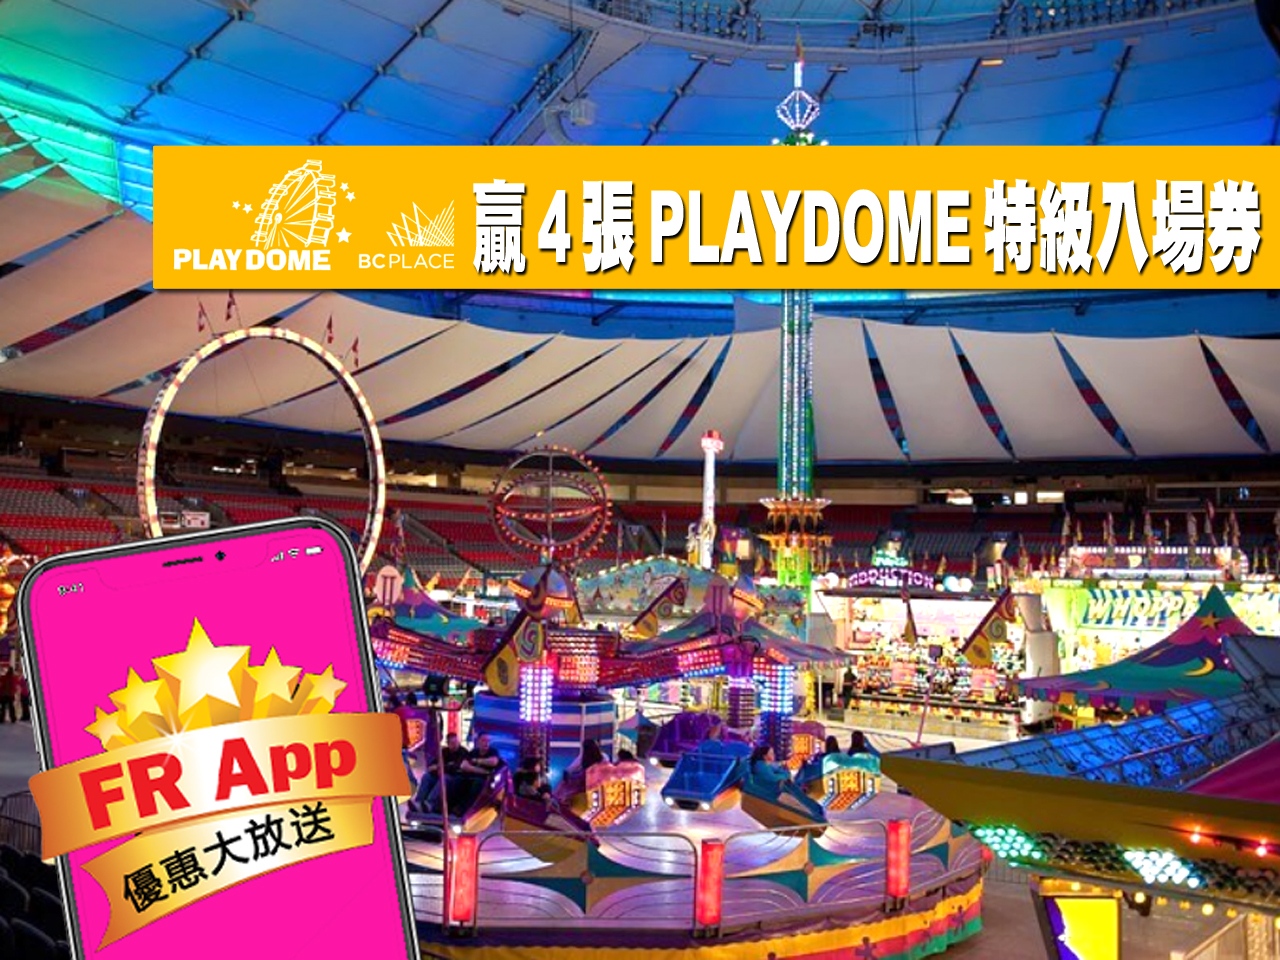 FR App 優惠大放送 - 4 張 Playdome 特級入場券送給你！［遊戲取消］